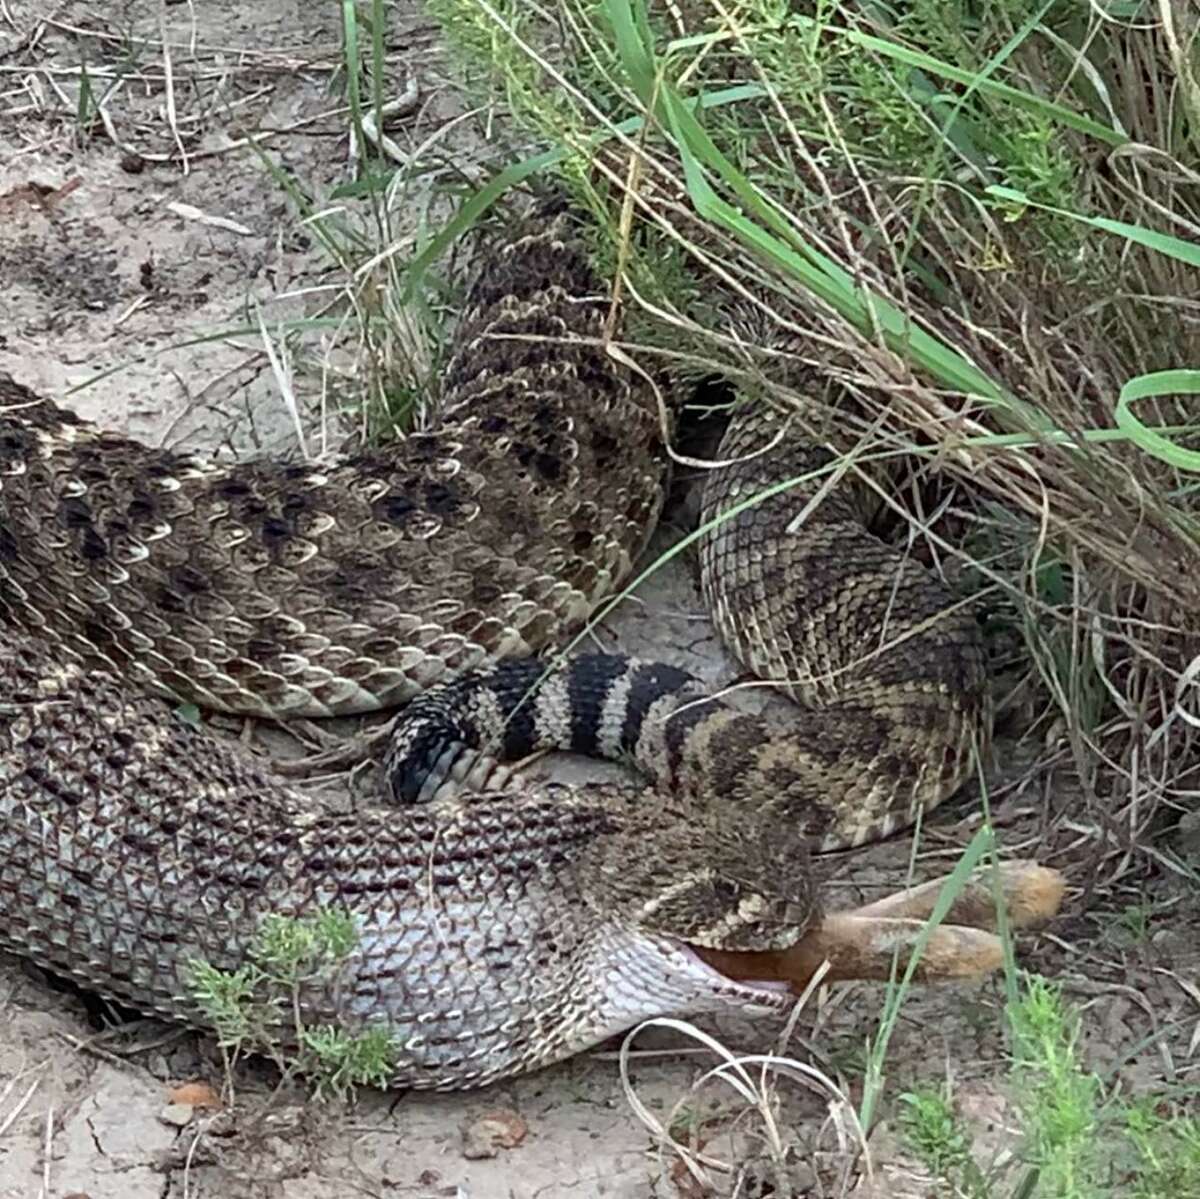 Video captures a 'massive' rattlesnake hunting a rabbit at Texas ranch